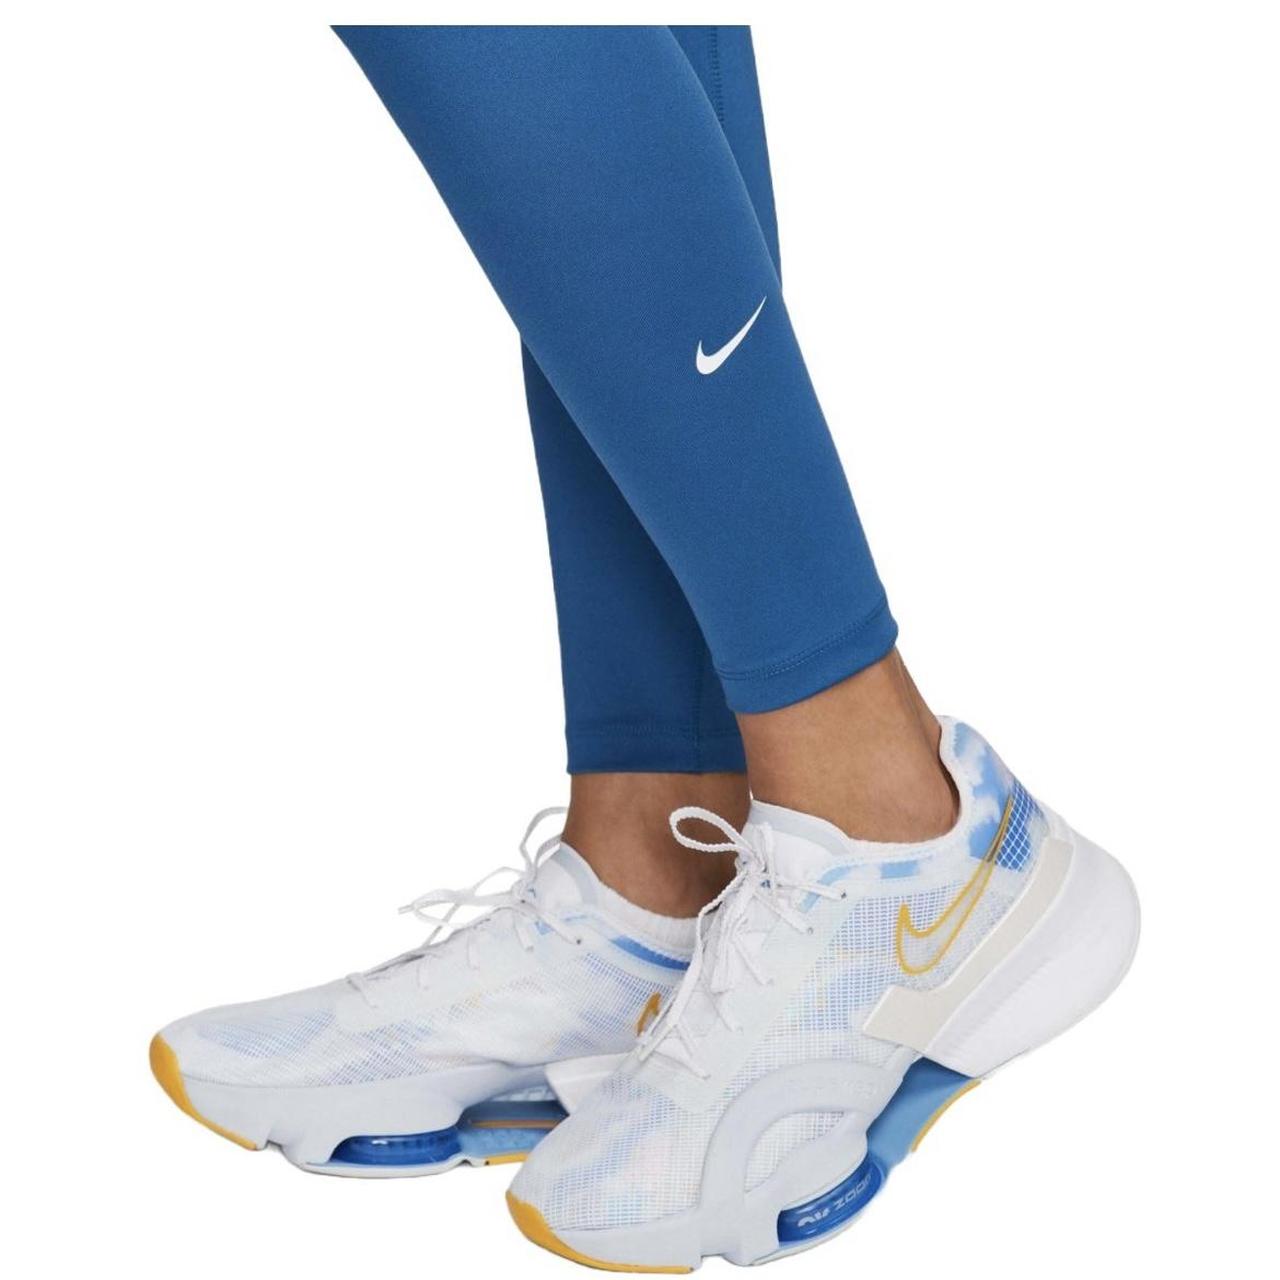 Nike Women's Dri-FIT Mid-Rise leggings in royal